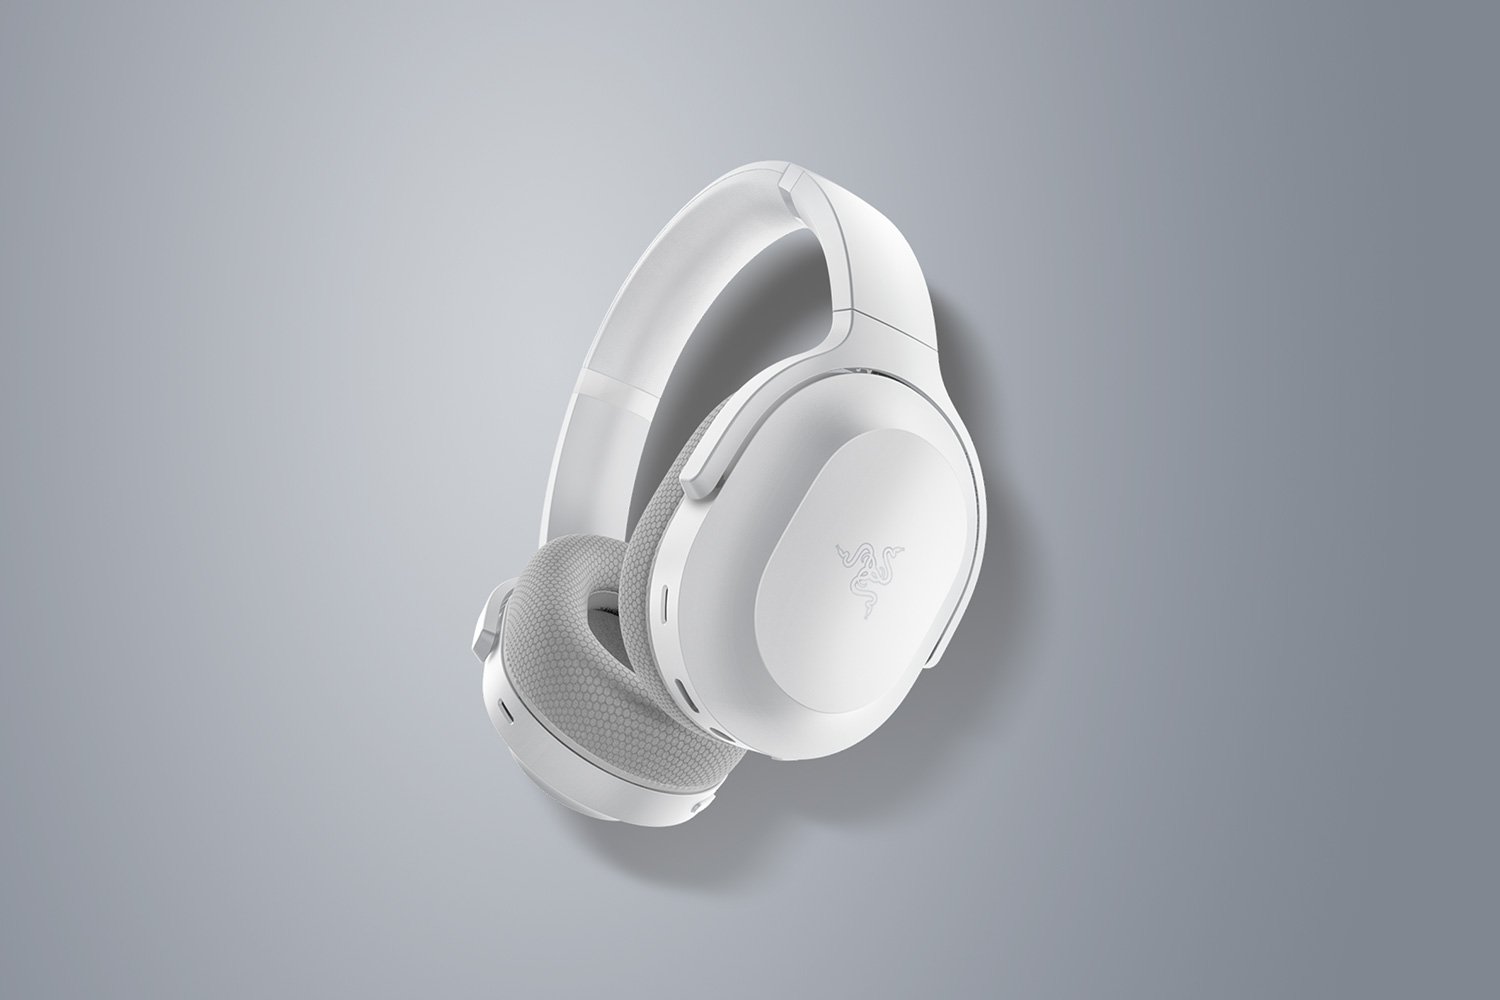 Razer Barracuda X 2022 edition , Audio, Headphones & Headsets on Carousell